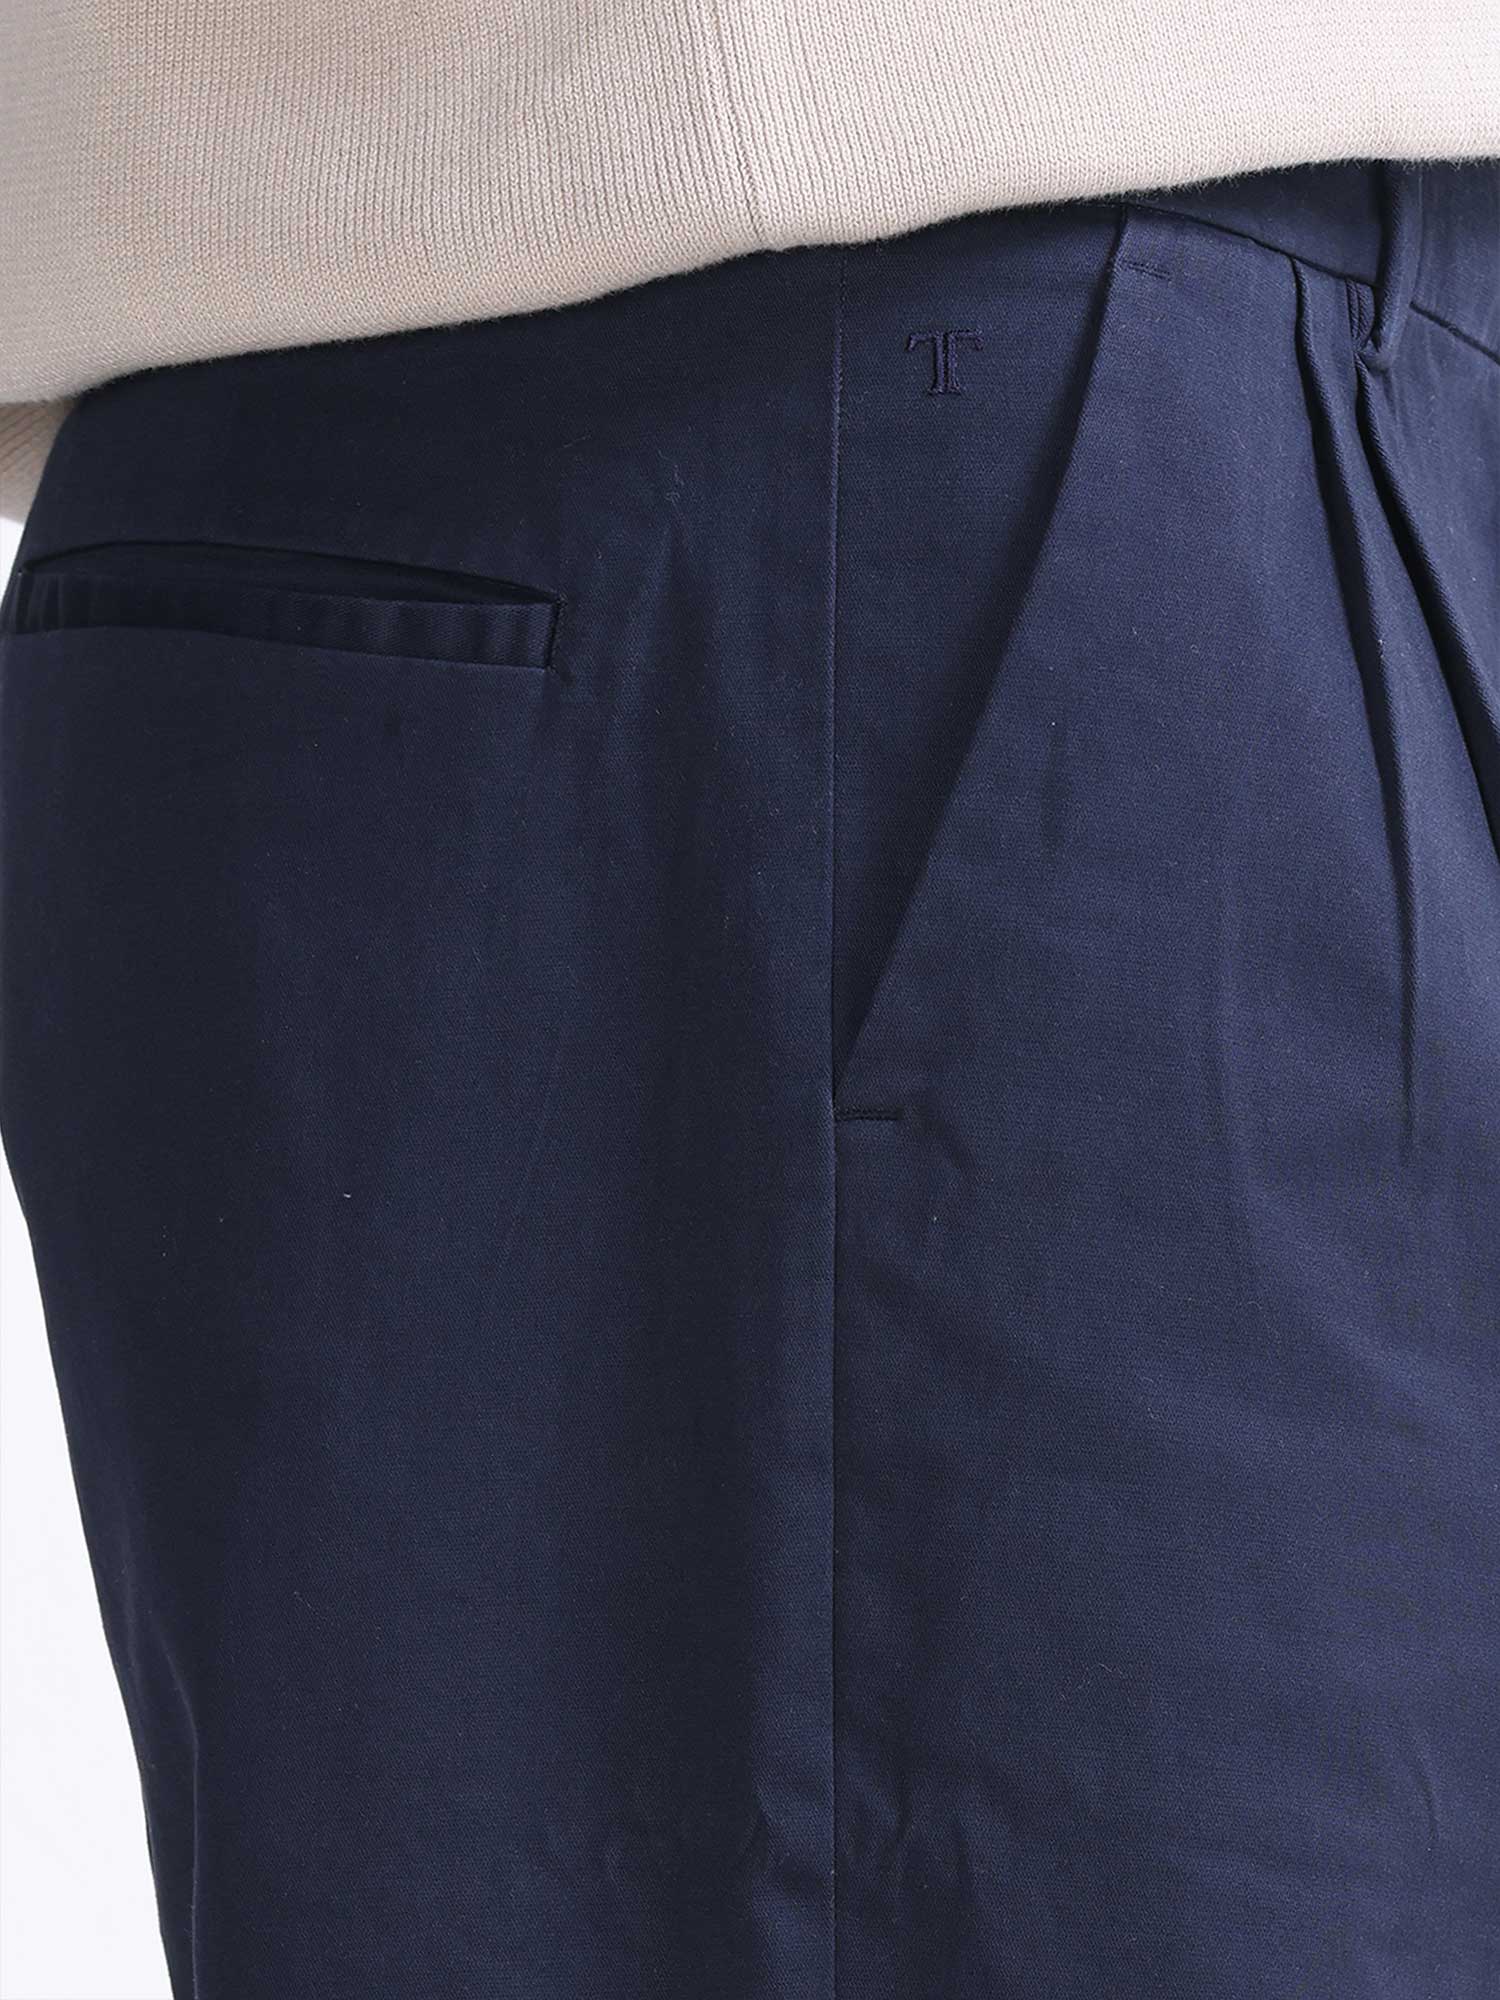 Men's Navy Chino Pants | Southern Tide